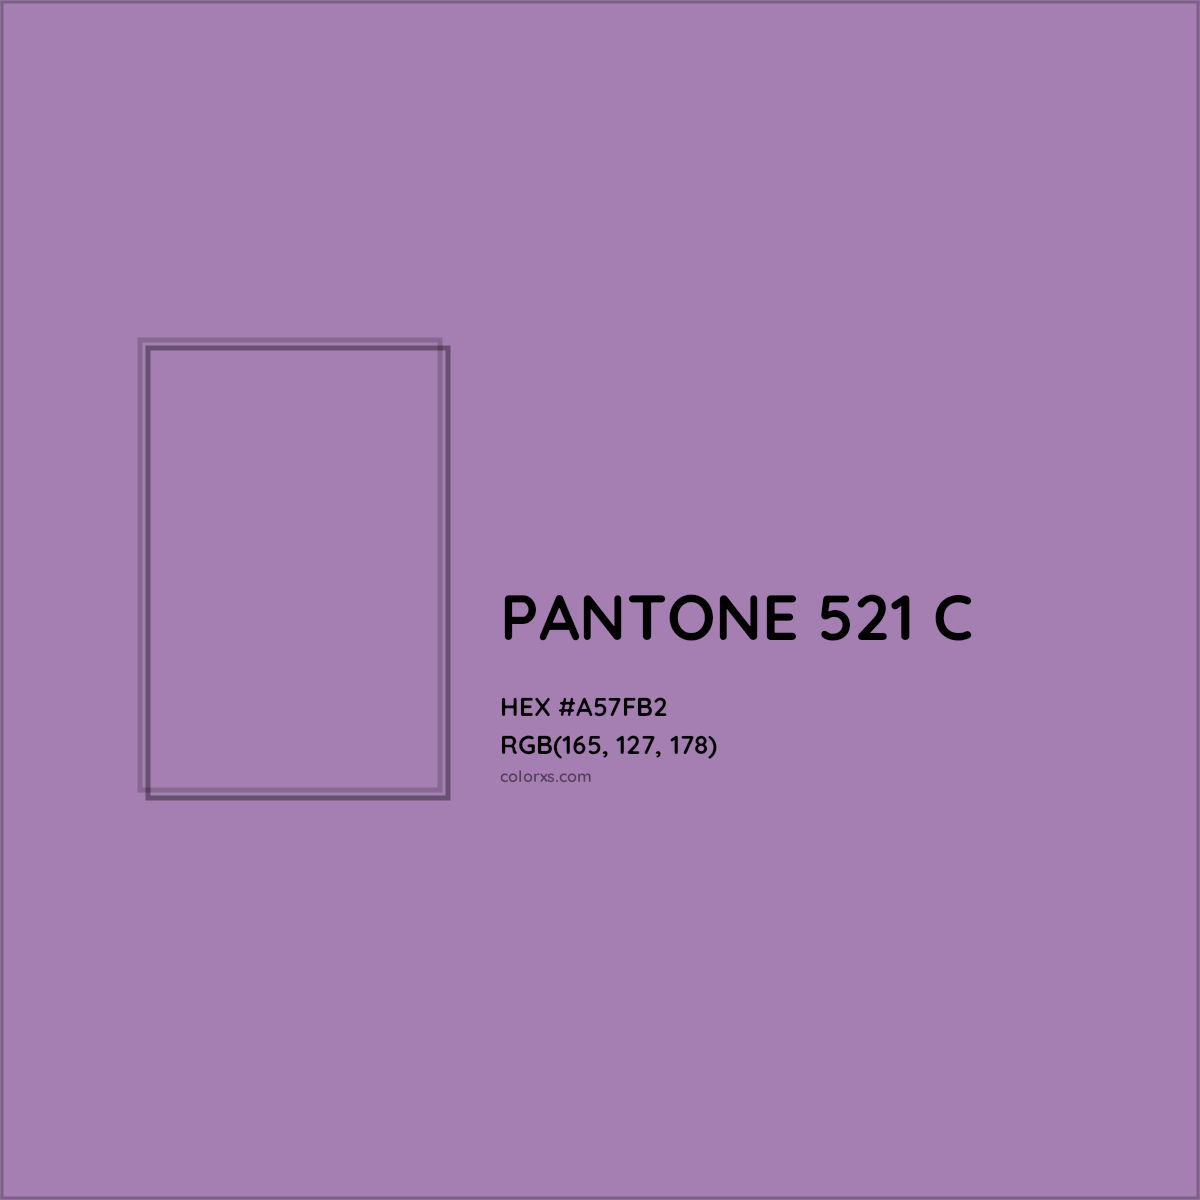 HEX #A57FB2 PANTONE 521 C CMS Pantone PMS - Color Code